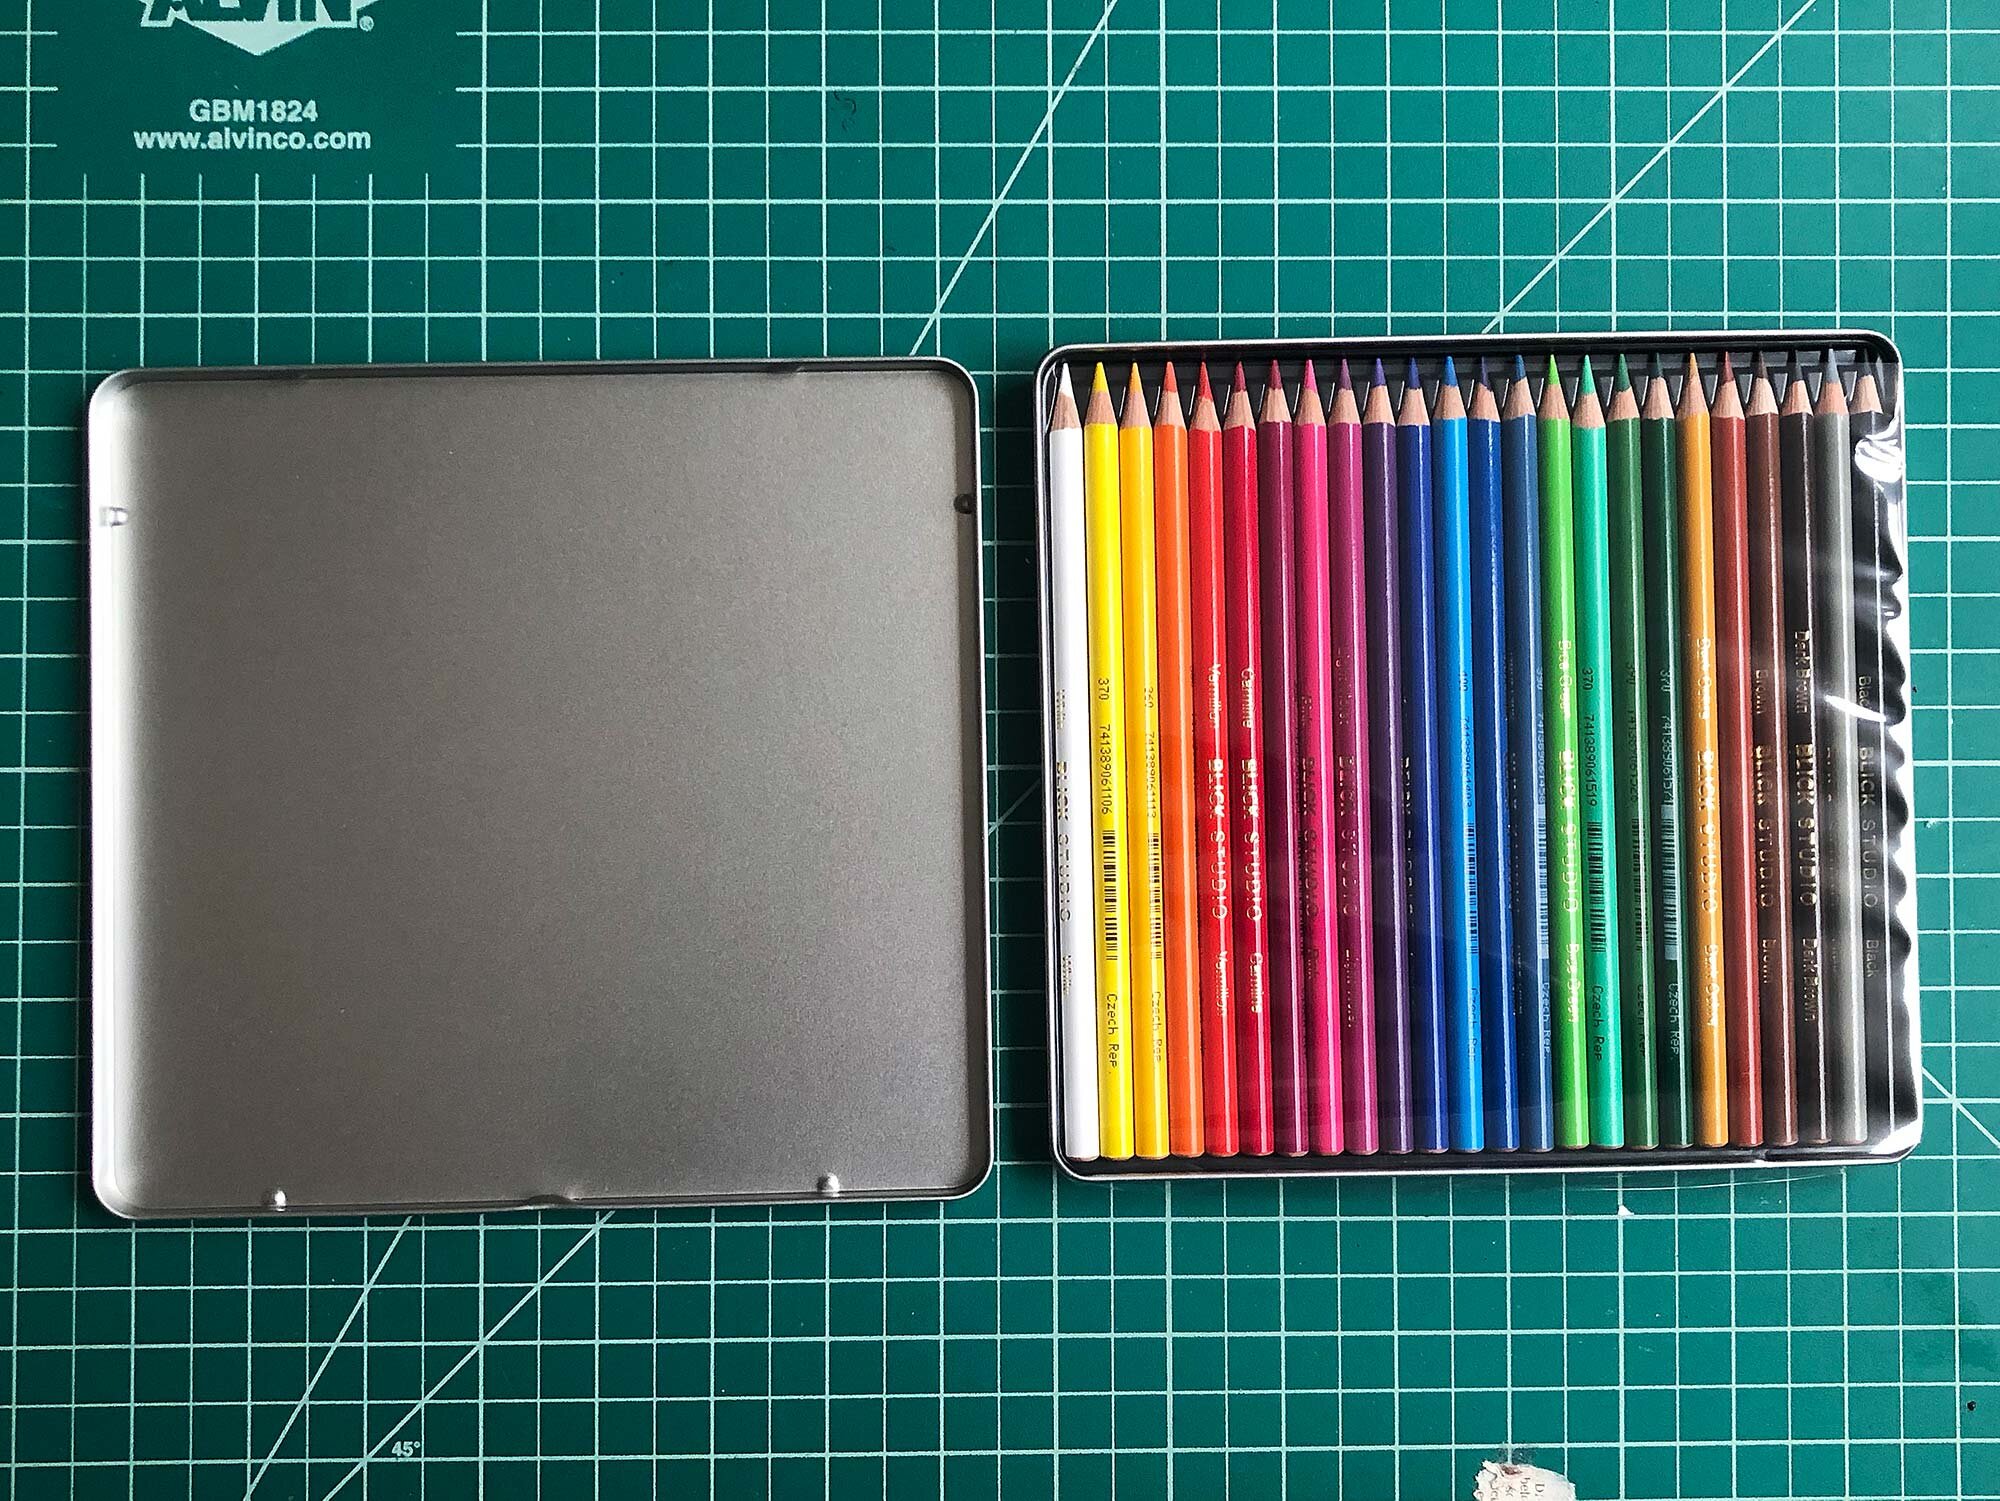 Balzer Designs: Blick Colored Pencils vs. Prismacolor